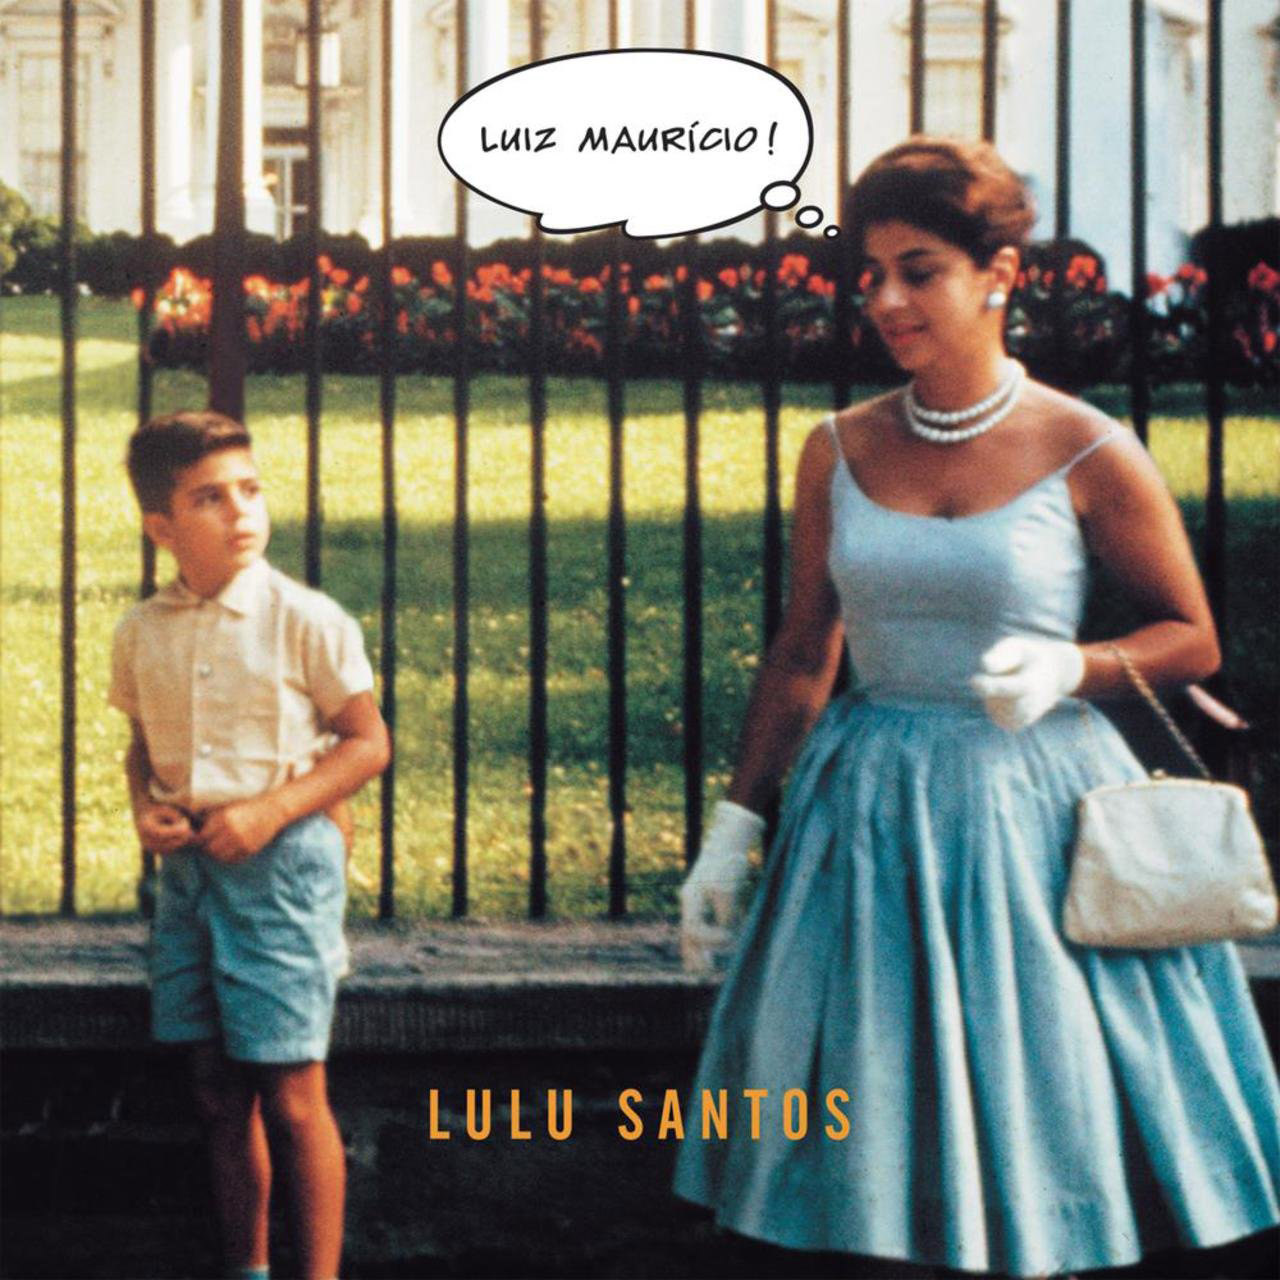 Lulu Santos Luiz Mauricio